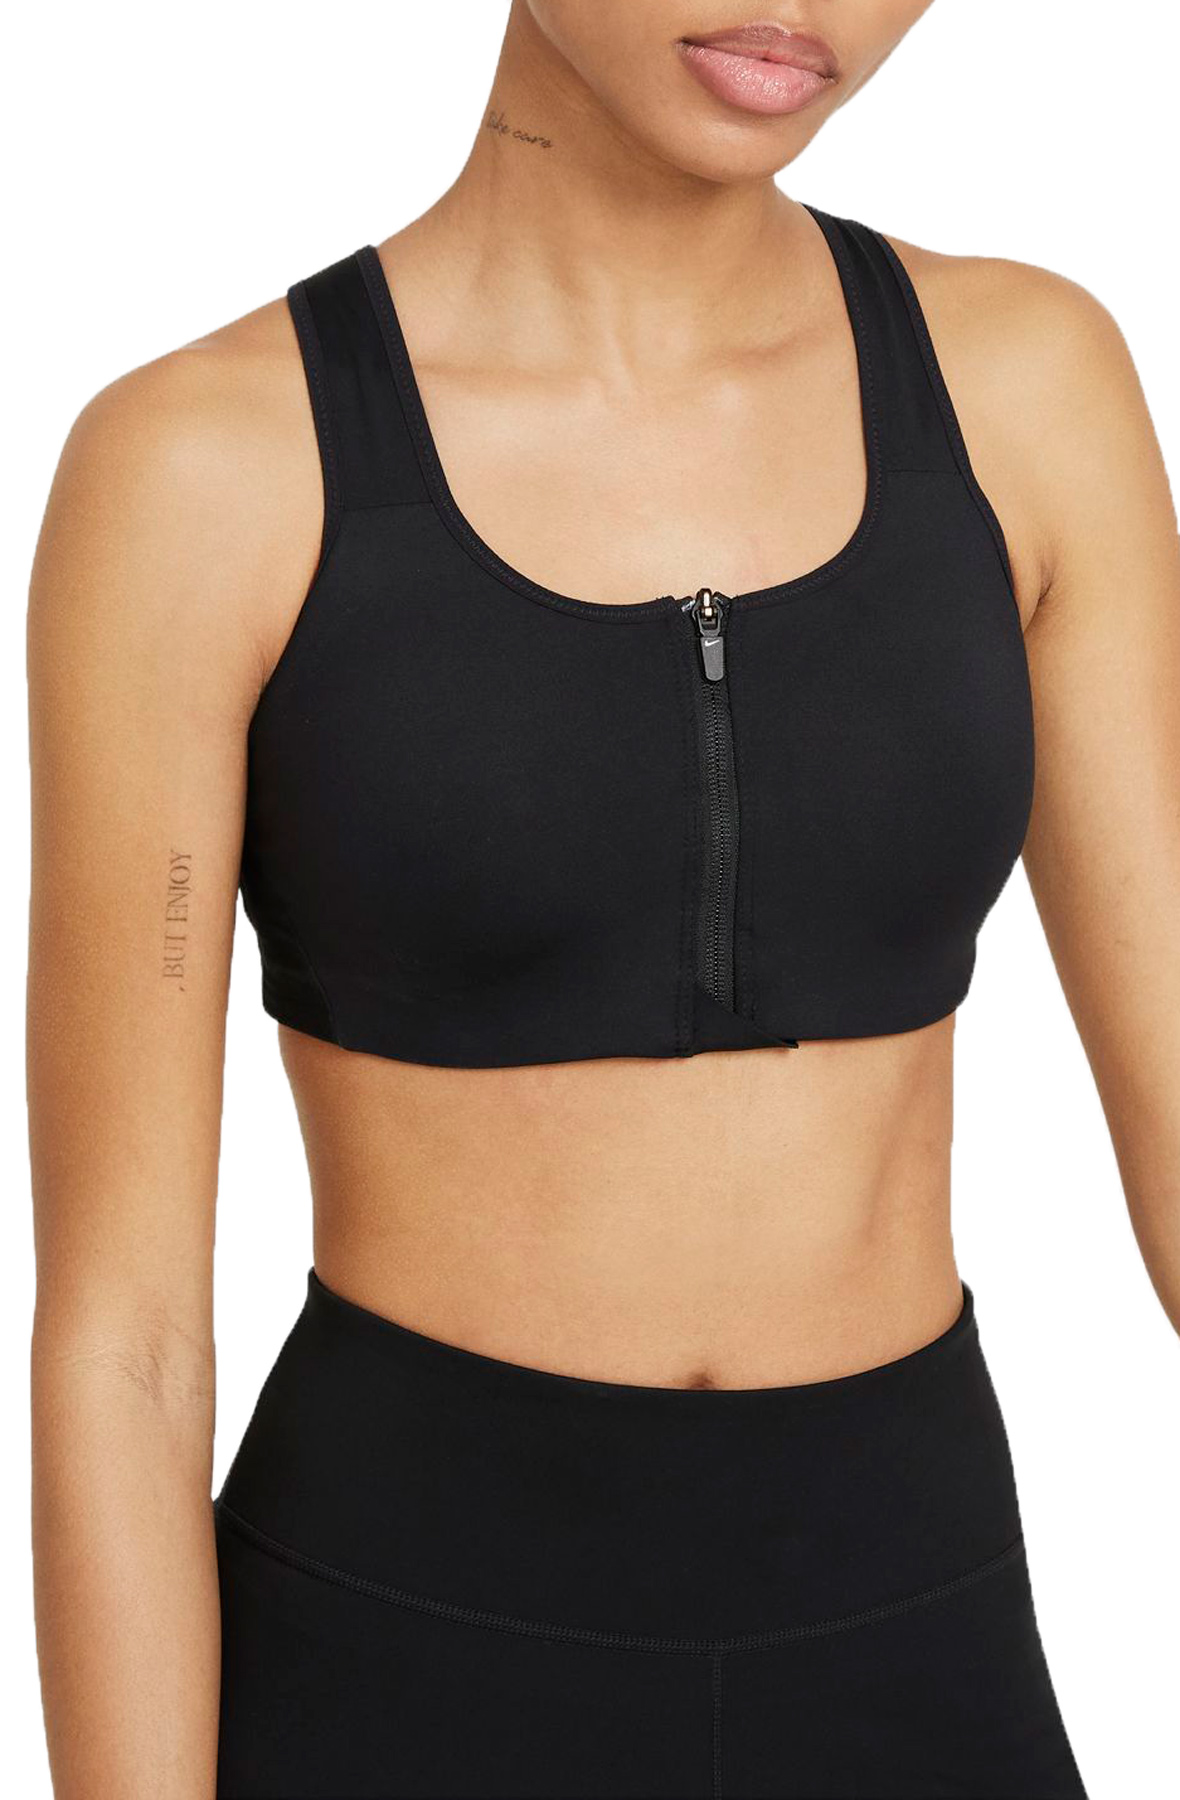 Nike Shape Women's High-Support Padded Zip-Front Sports Bra Medium $60